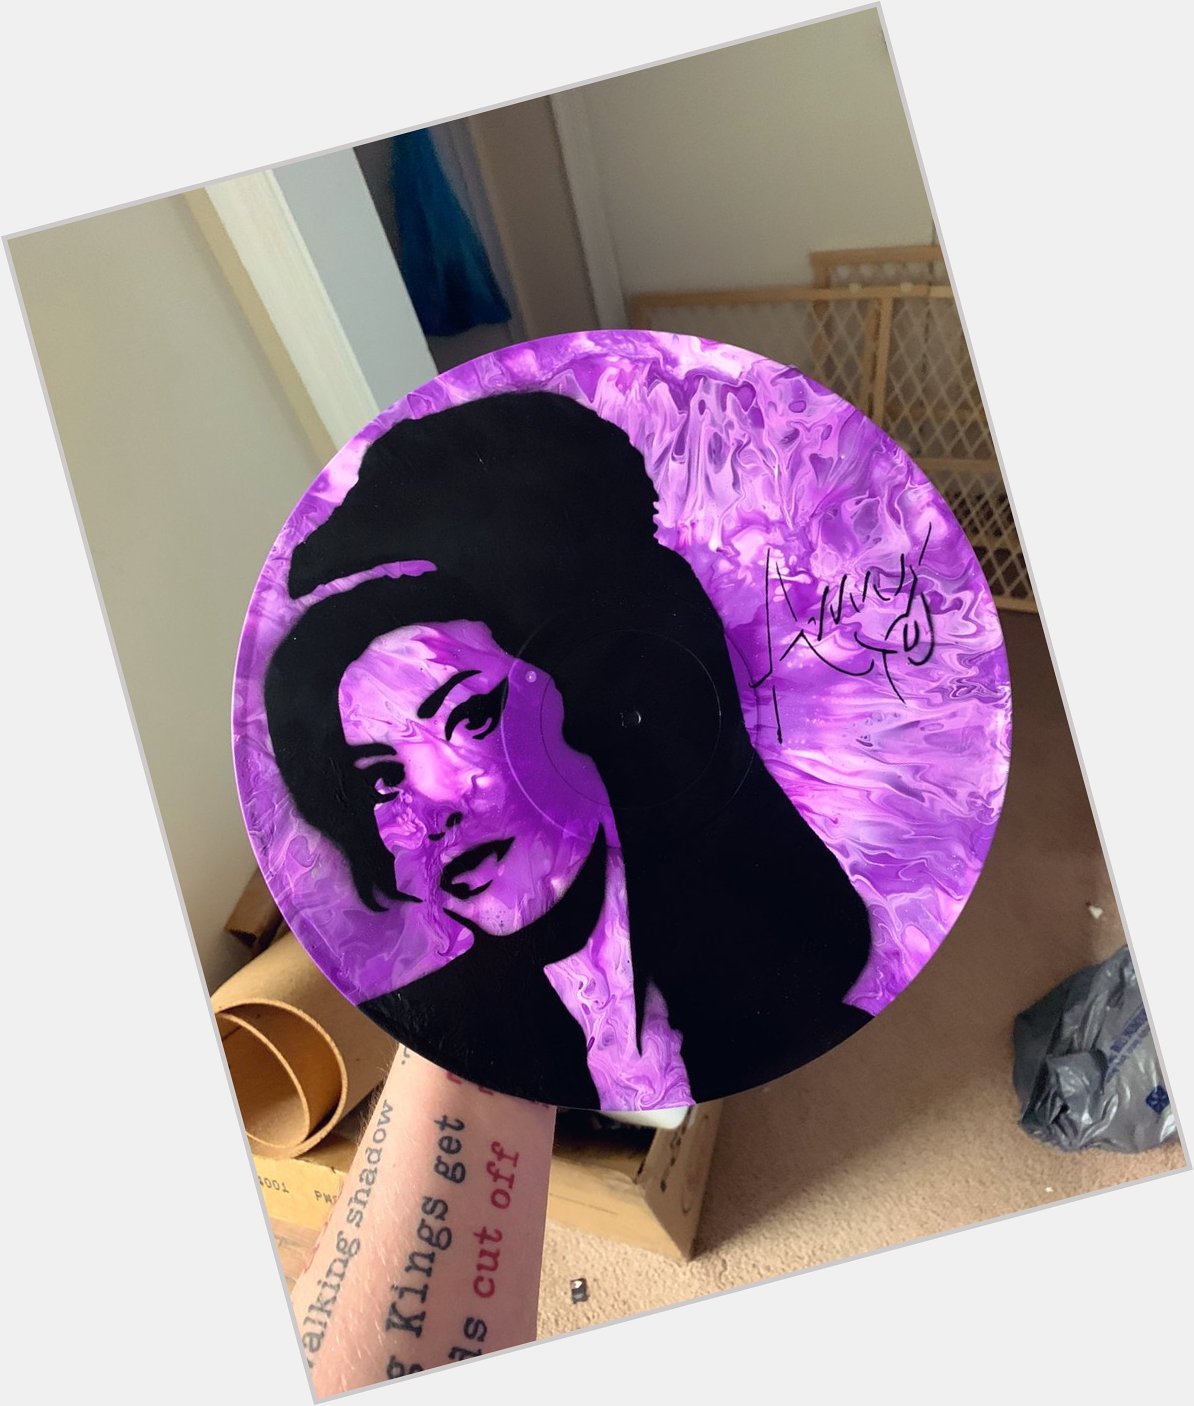  Amy Winehouse repurposed vinyl record art by me

Happy Birthday Amy 